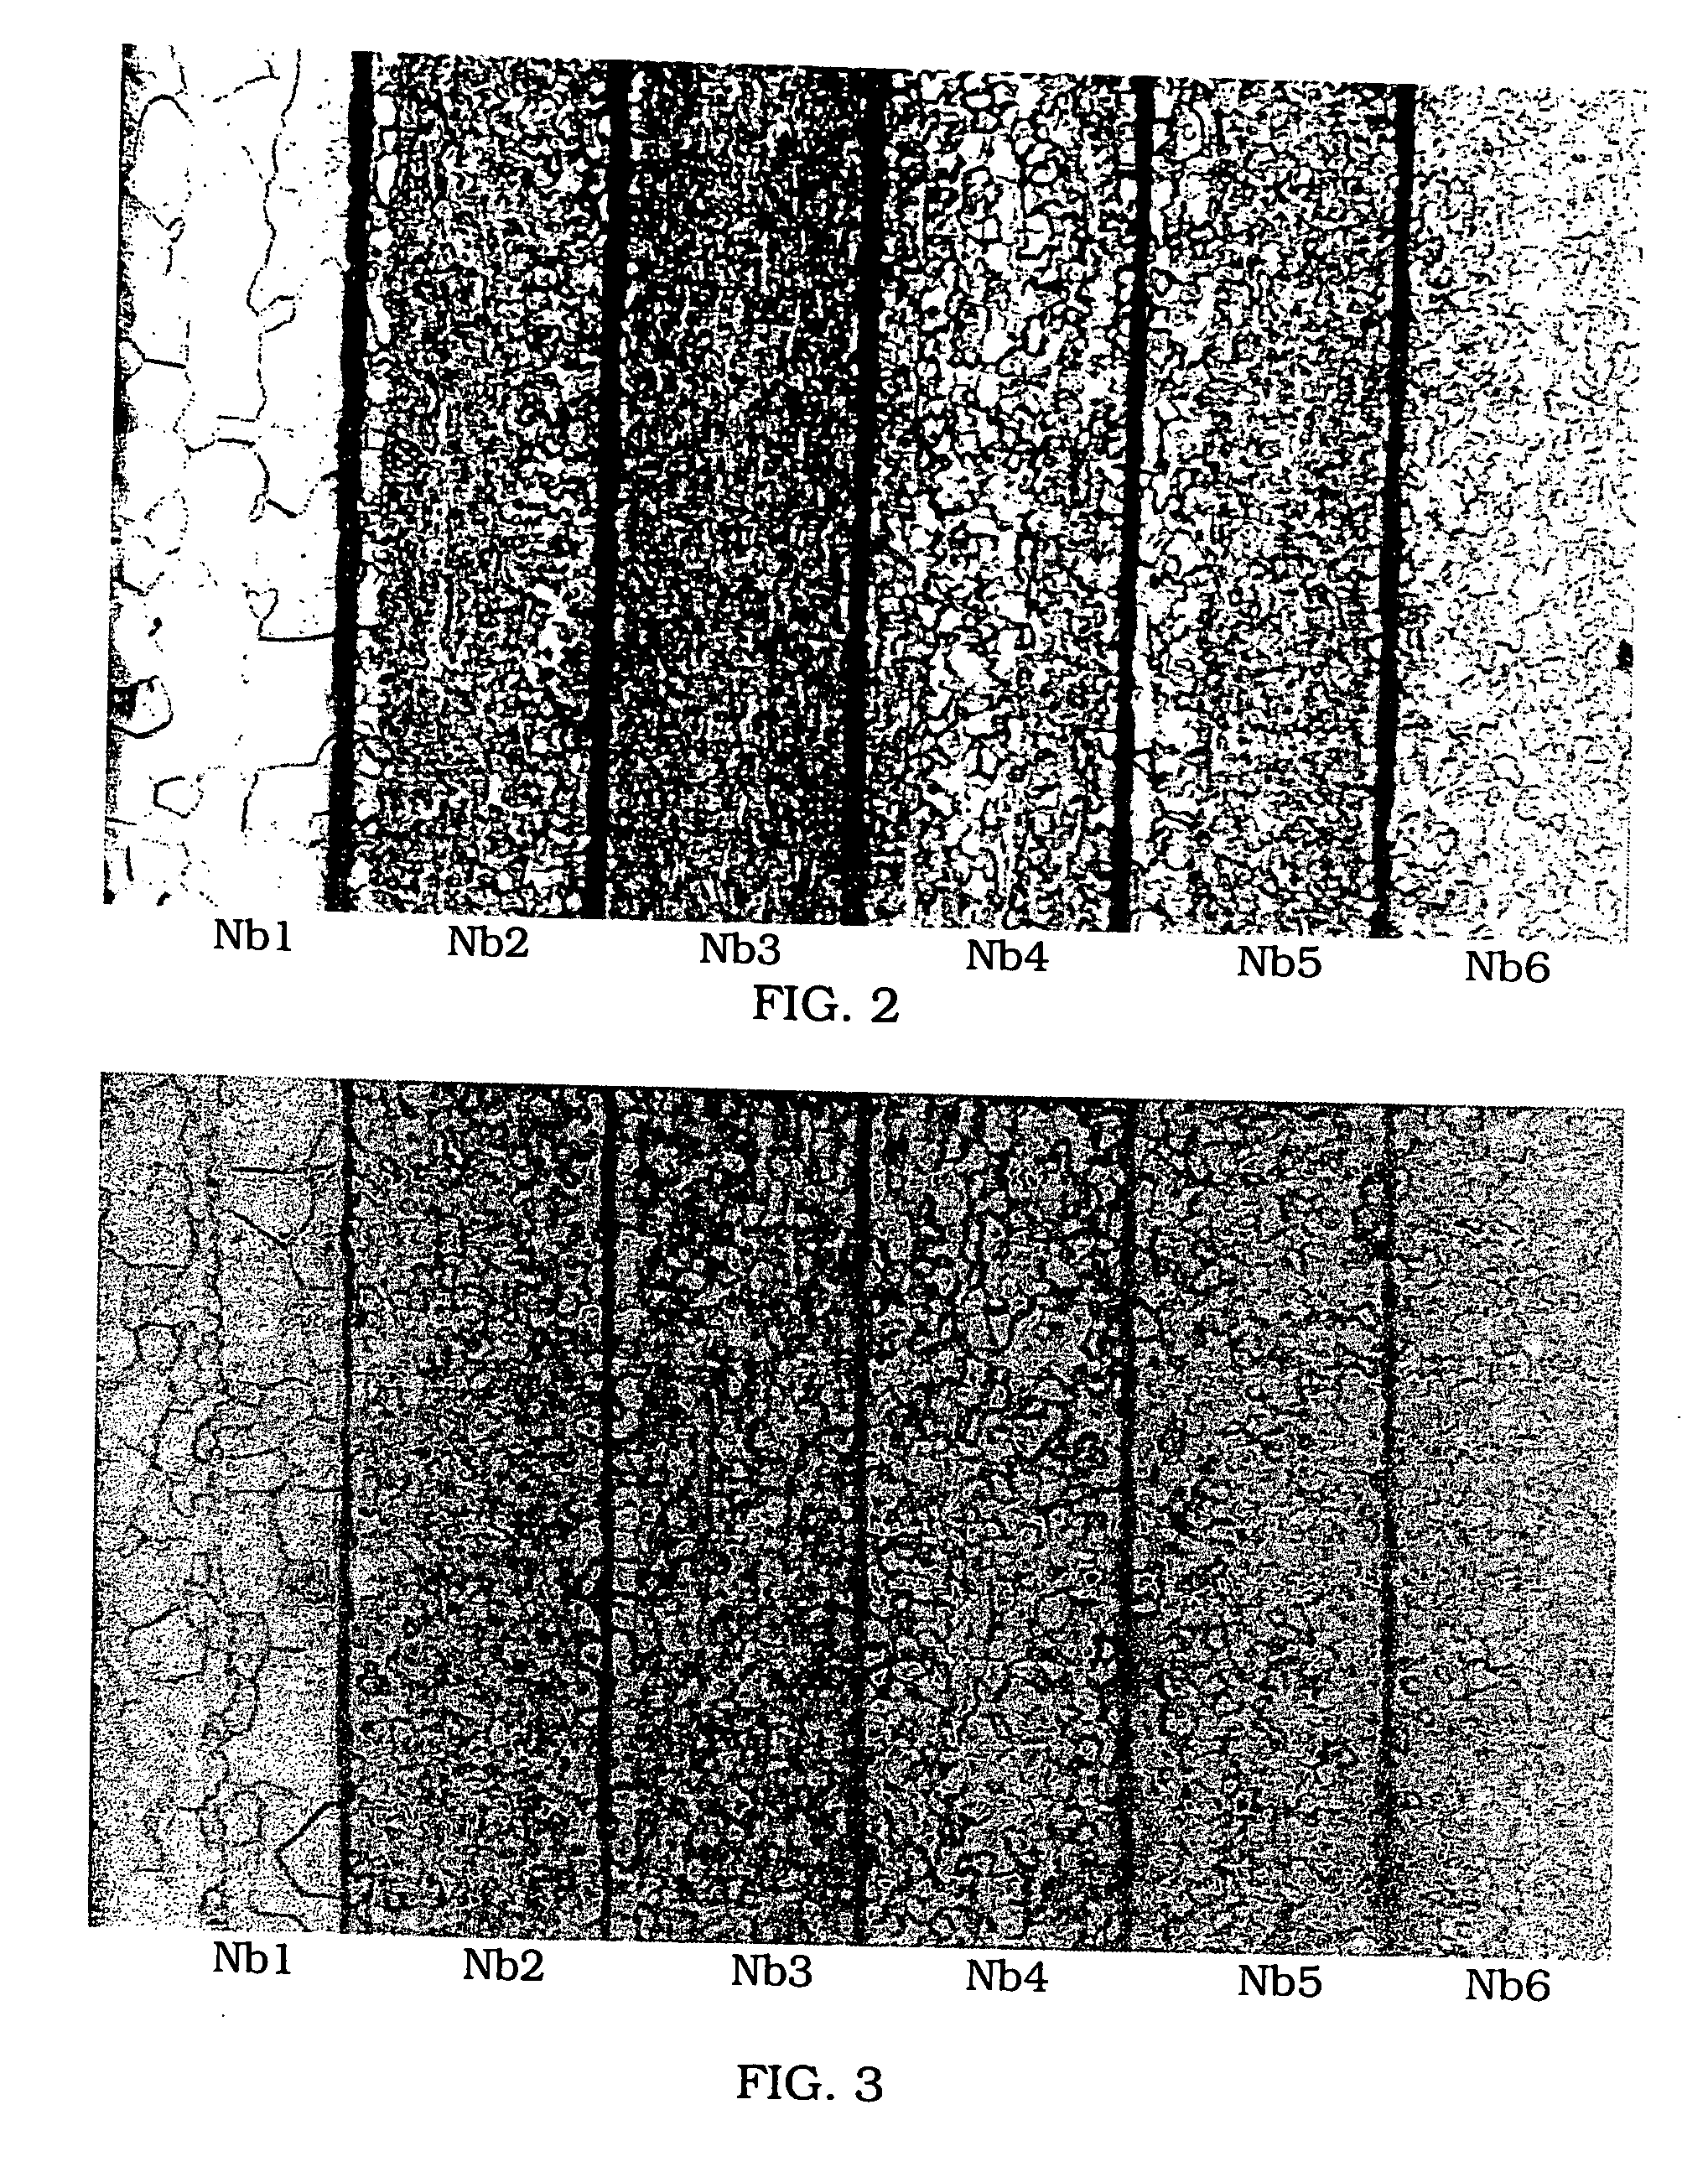 Fine grain niobium sheet via ingot metallurgy